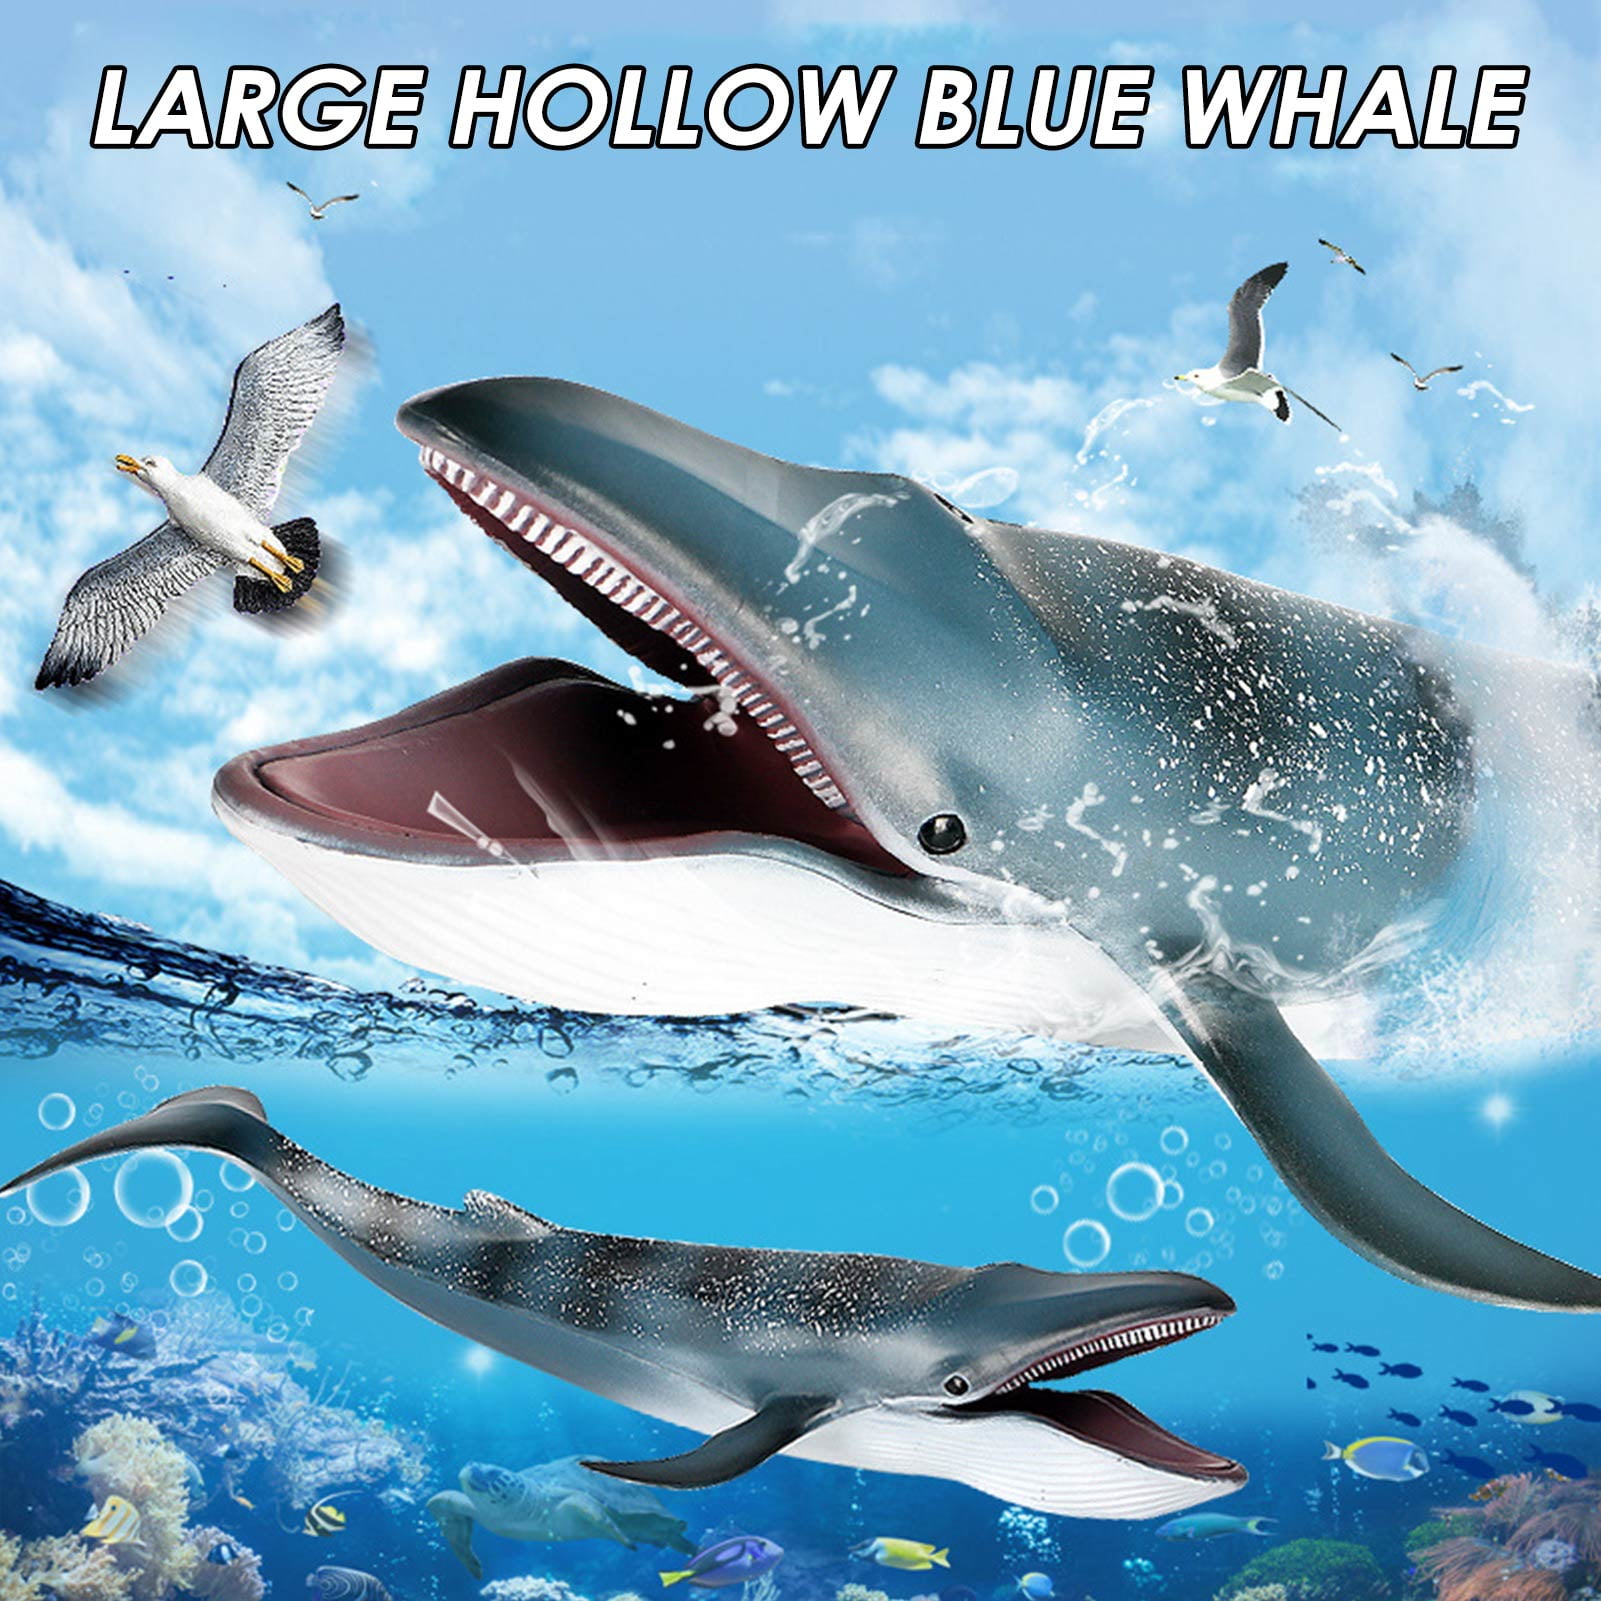 Floz Humpback whale 11 inches movable jaw Sea animal marine life figure model